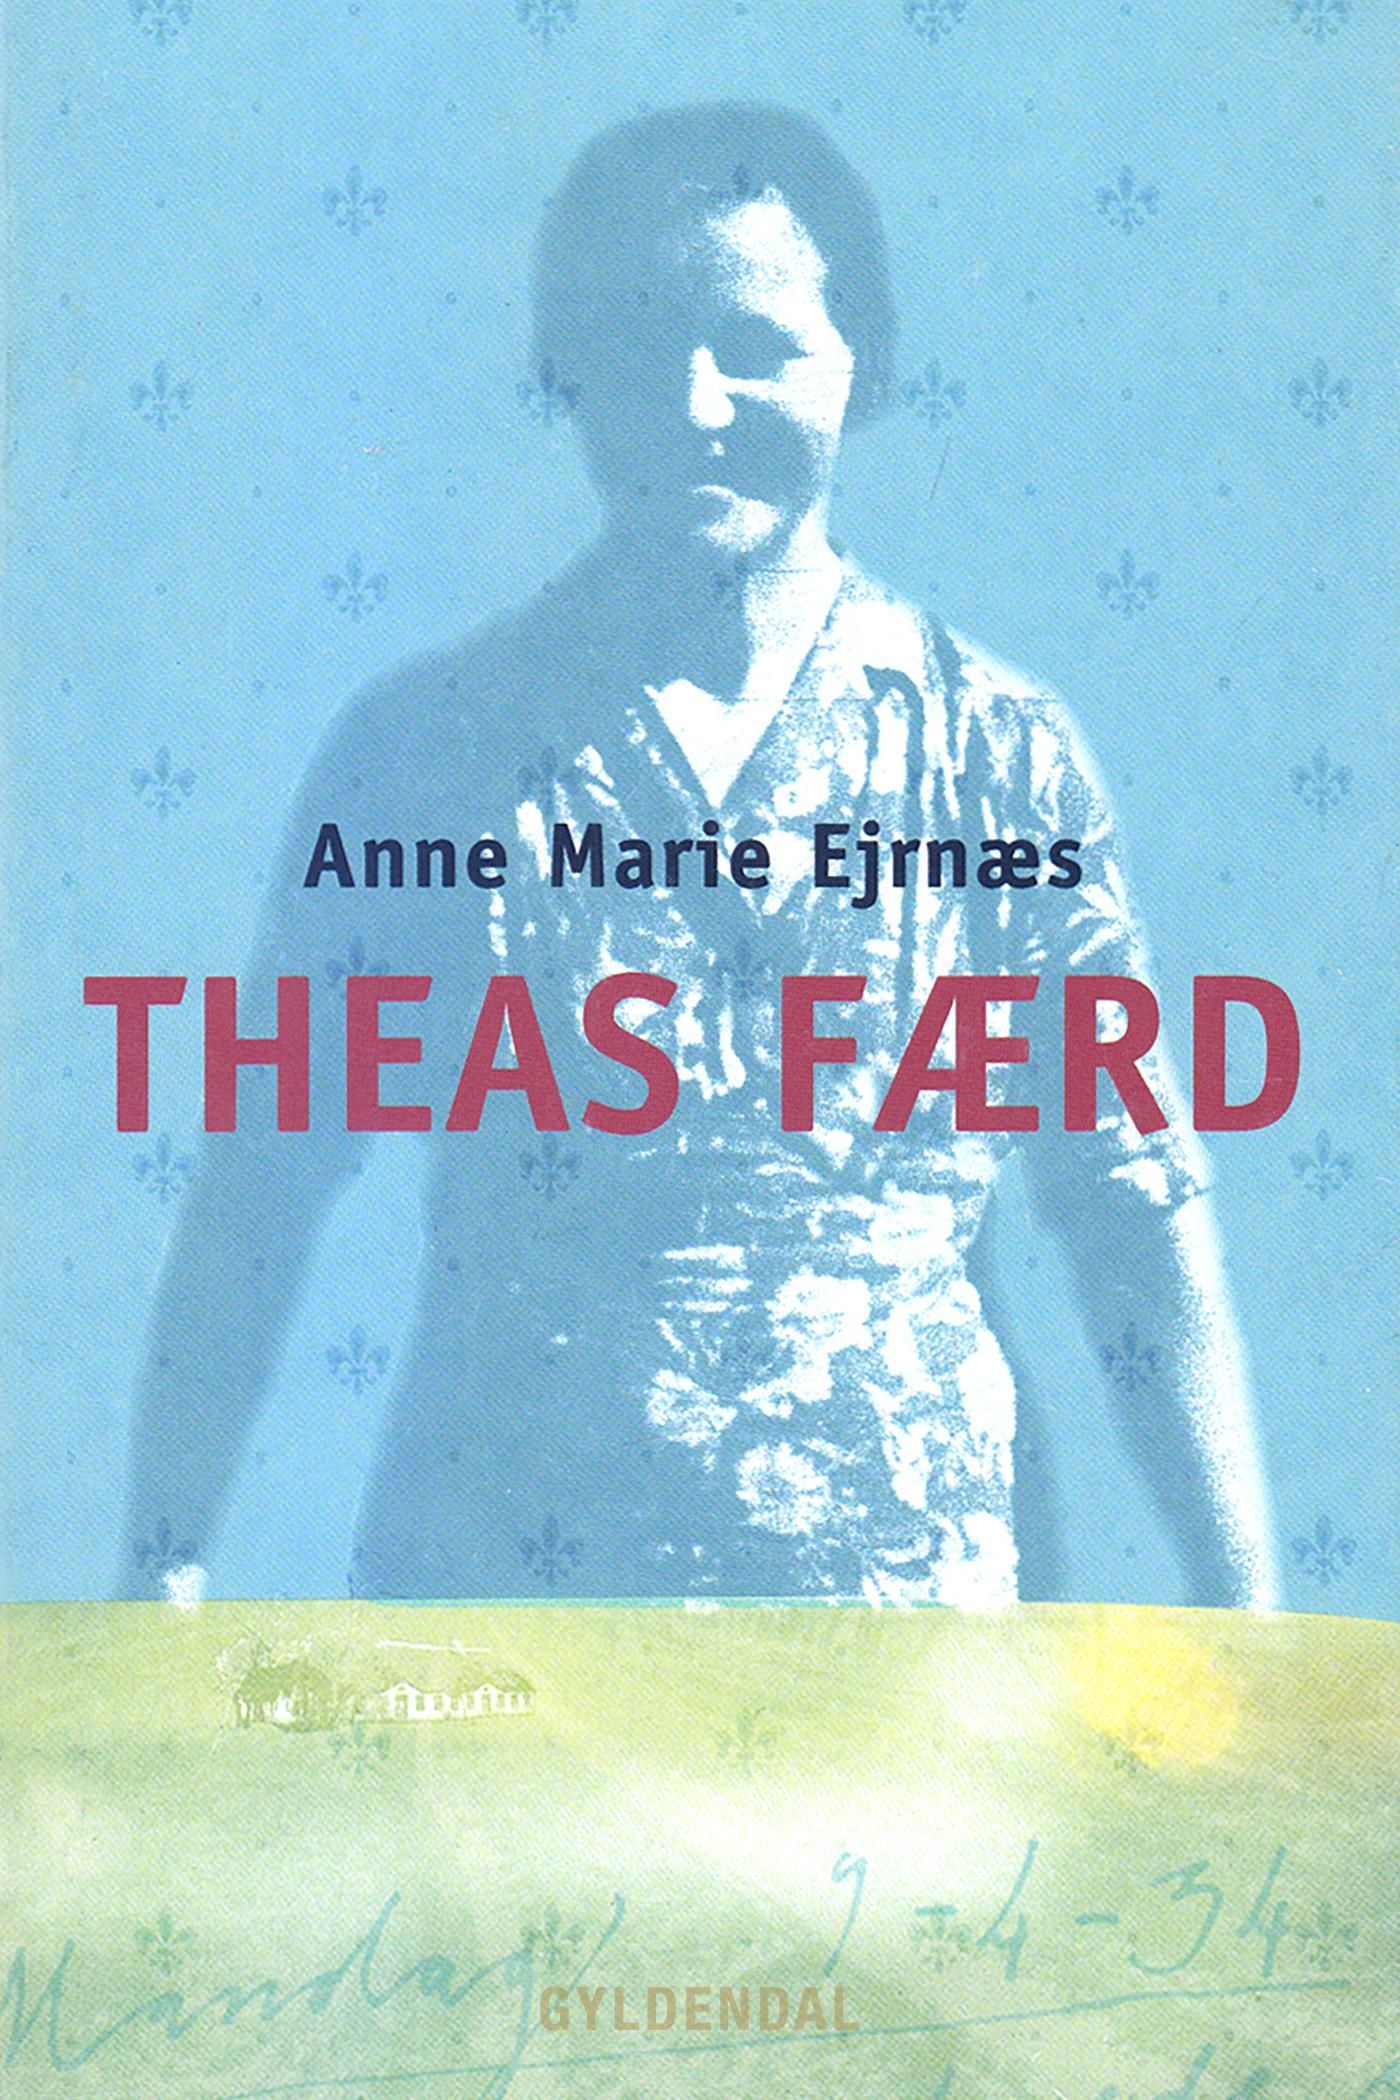 Theas færd, eBook by Anne Marie Ejrnæs